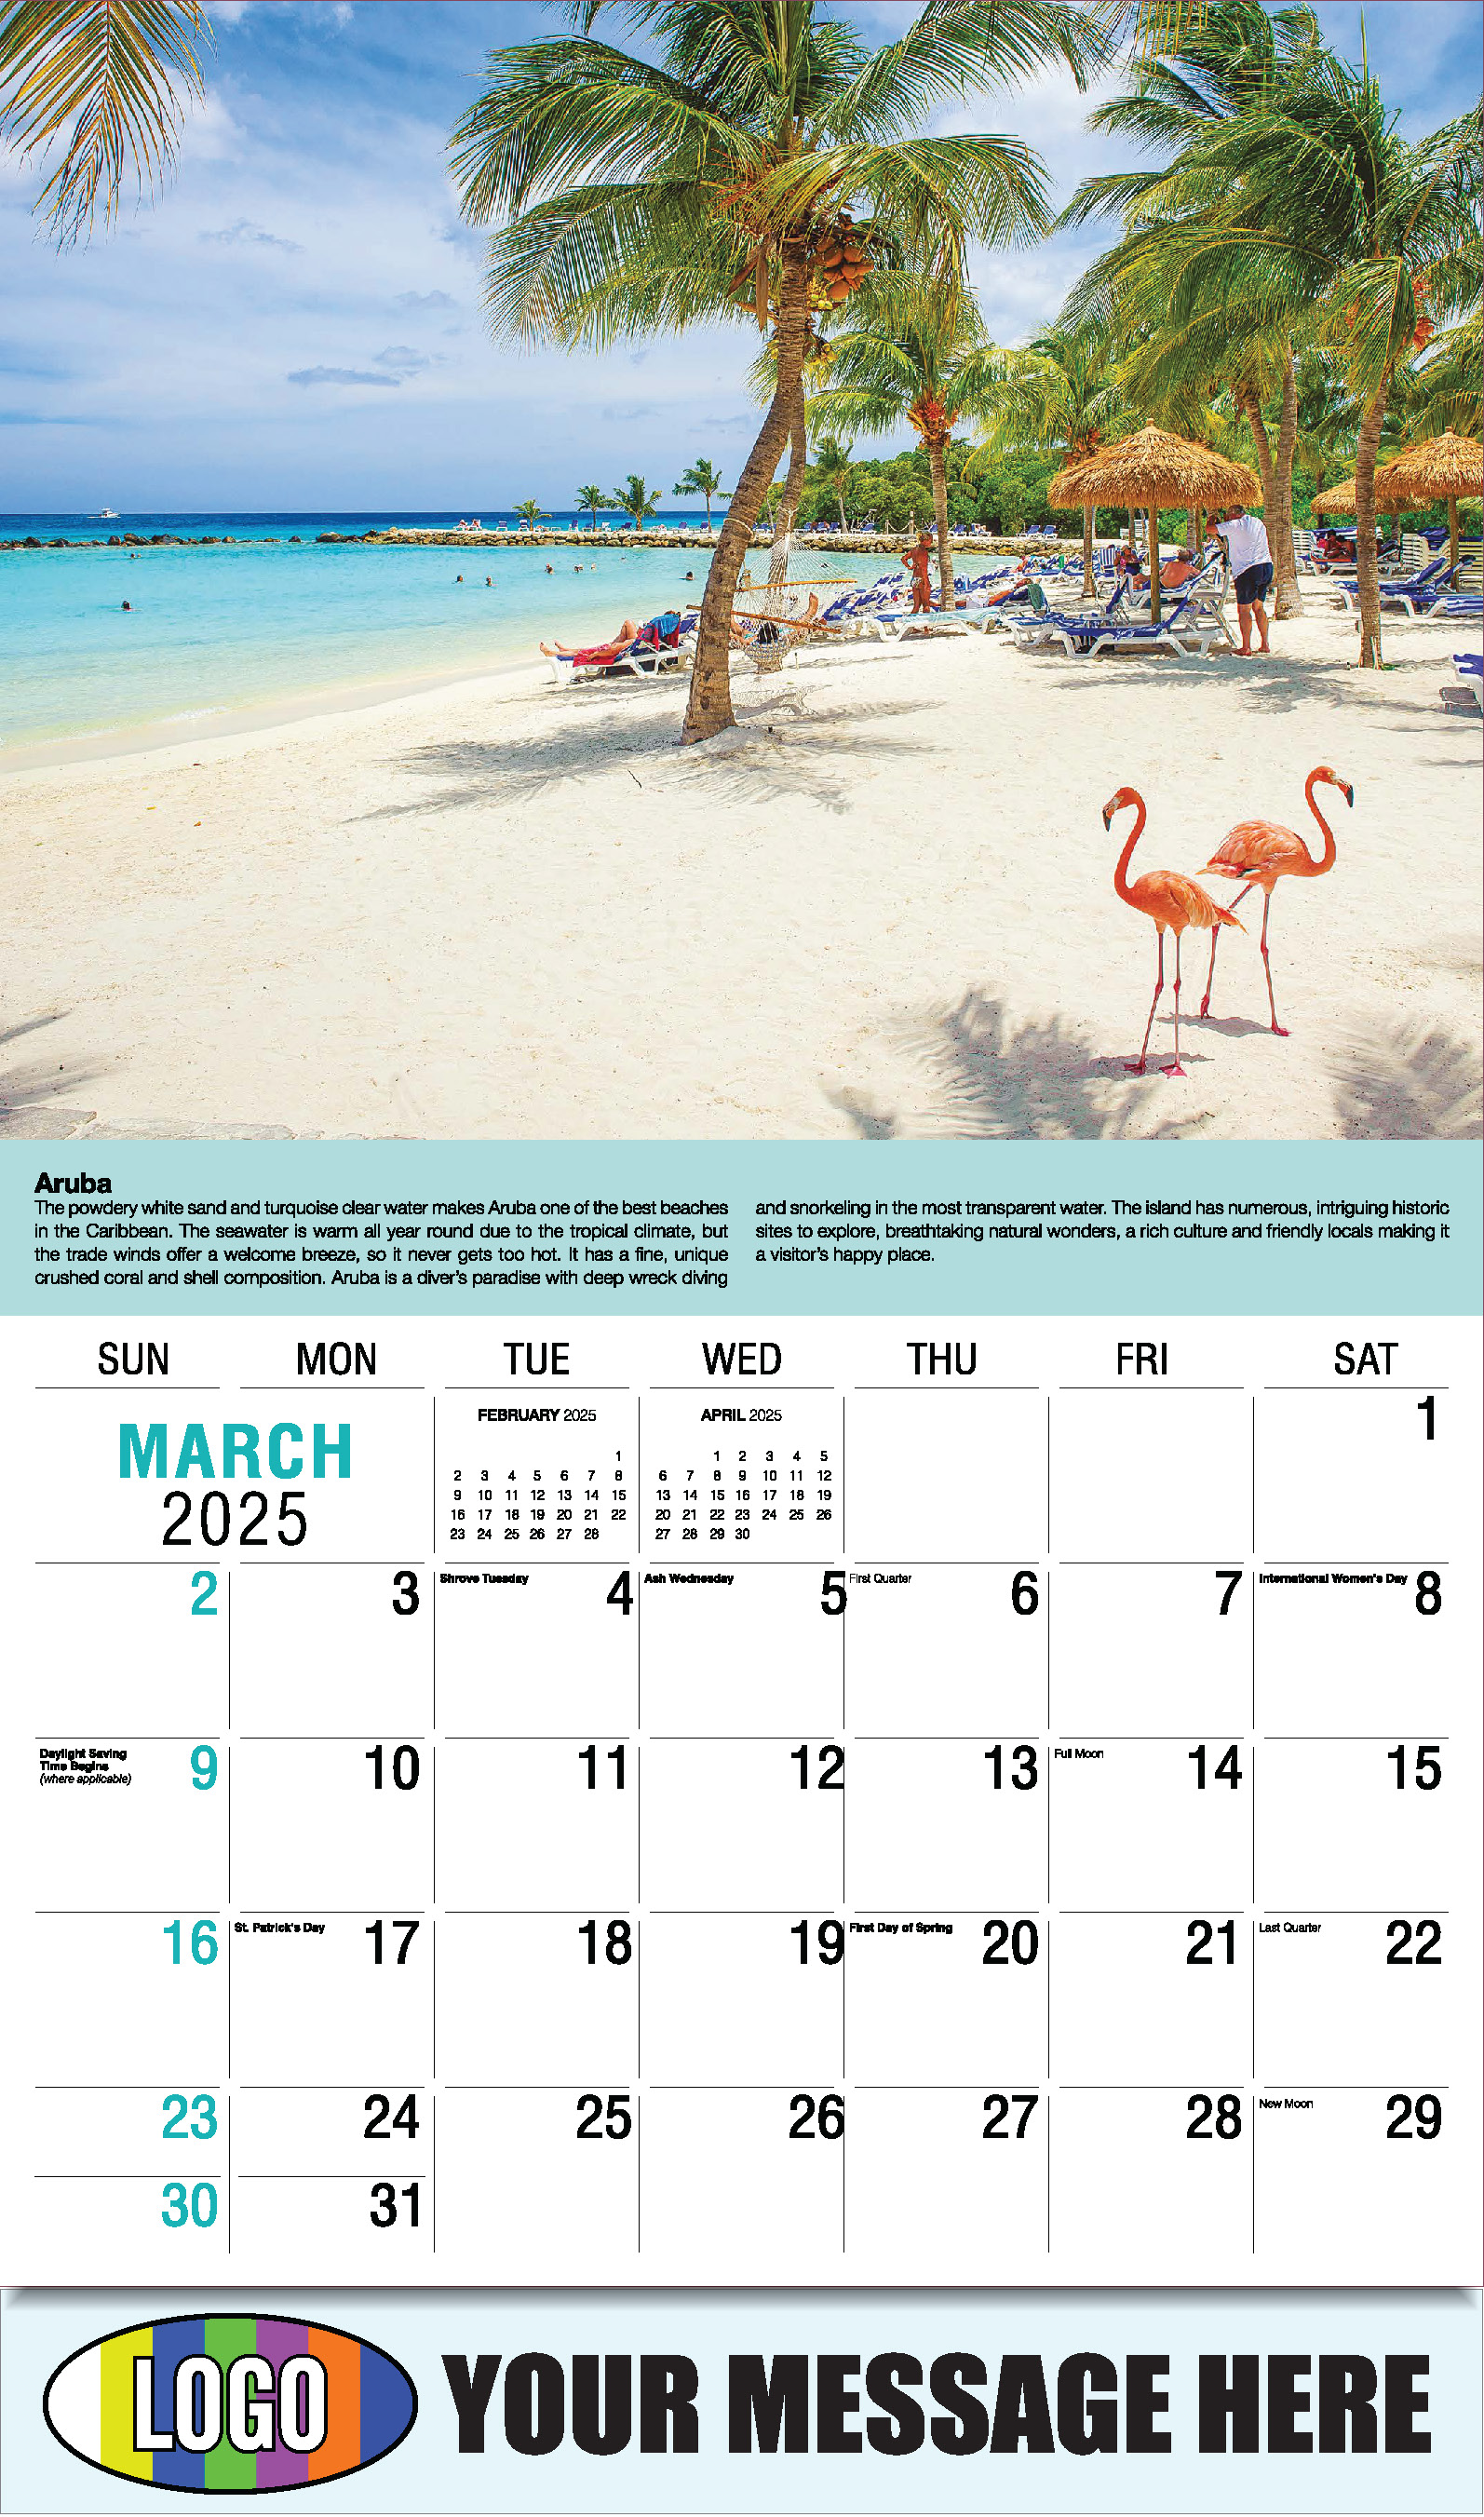 World Travel 2025 Business Advertising Wall Calendar - March